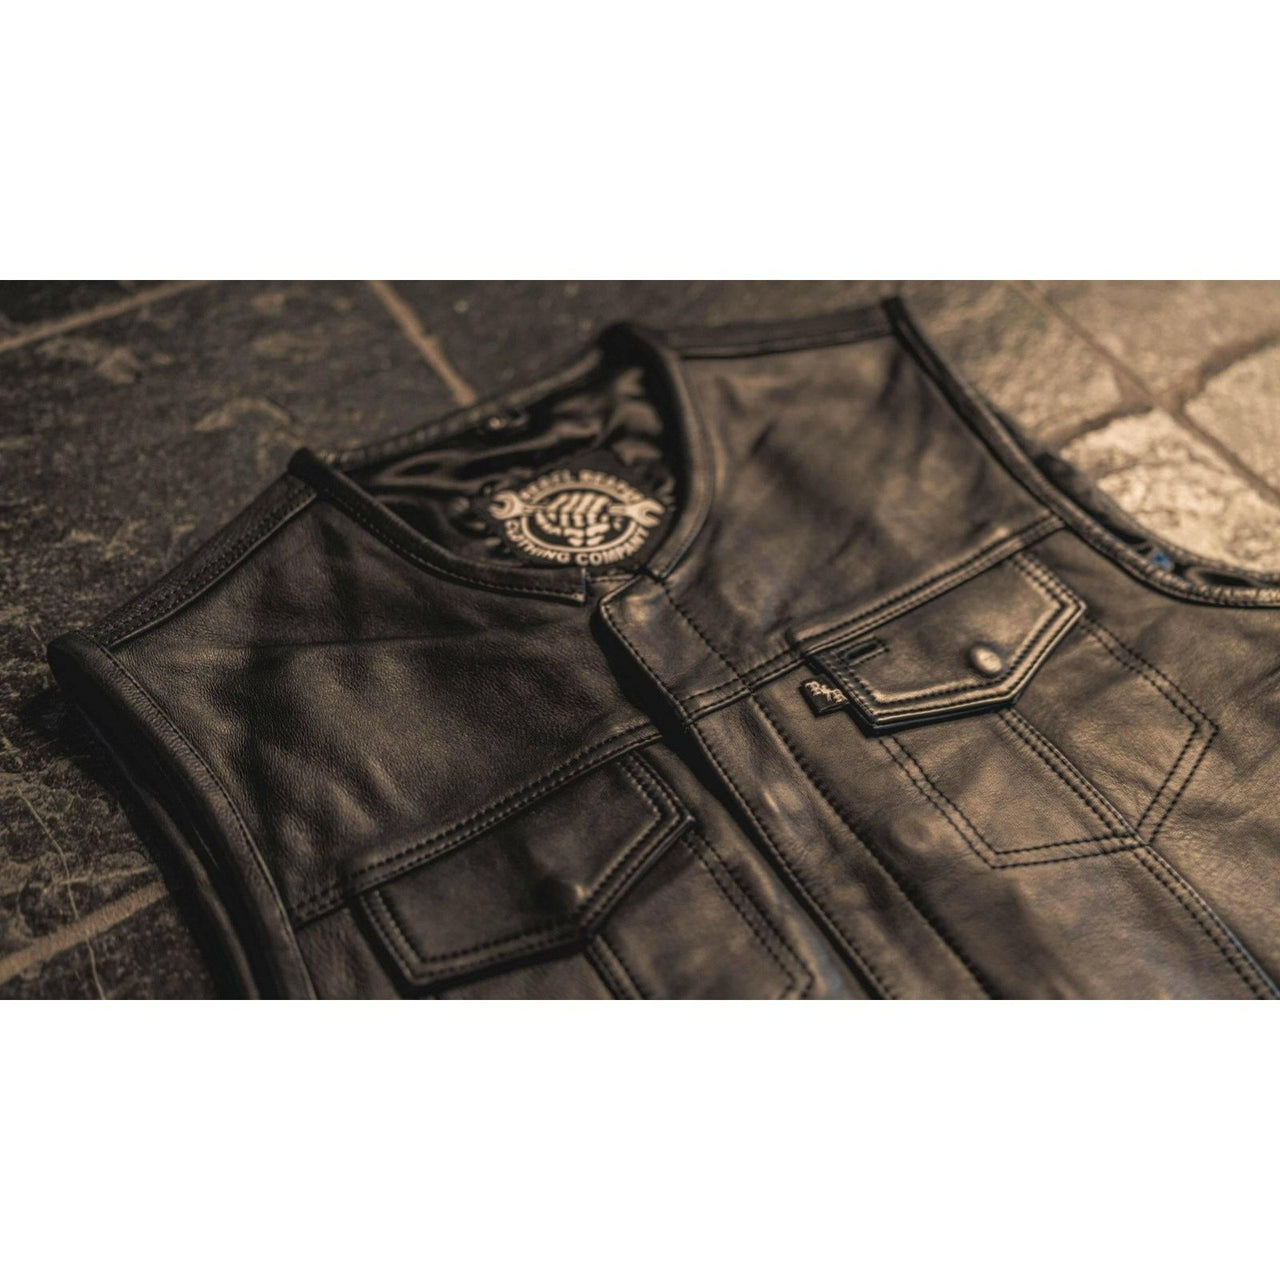 Muerte Short Torso BLack Leather Mens Vest - Rebel Reaper Clothing Company Men's Vest